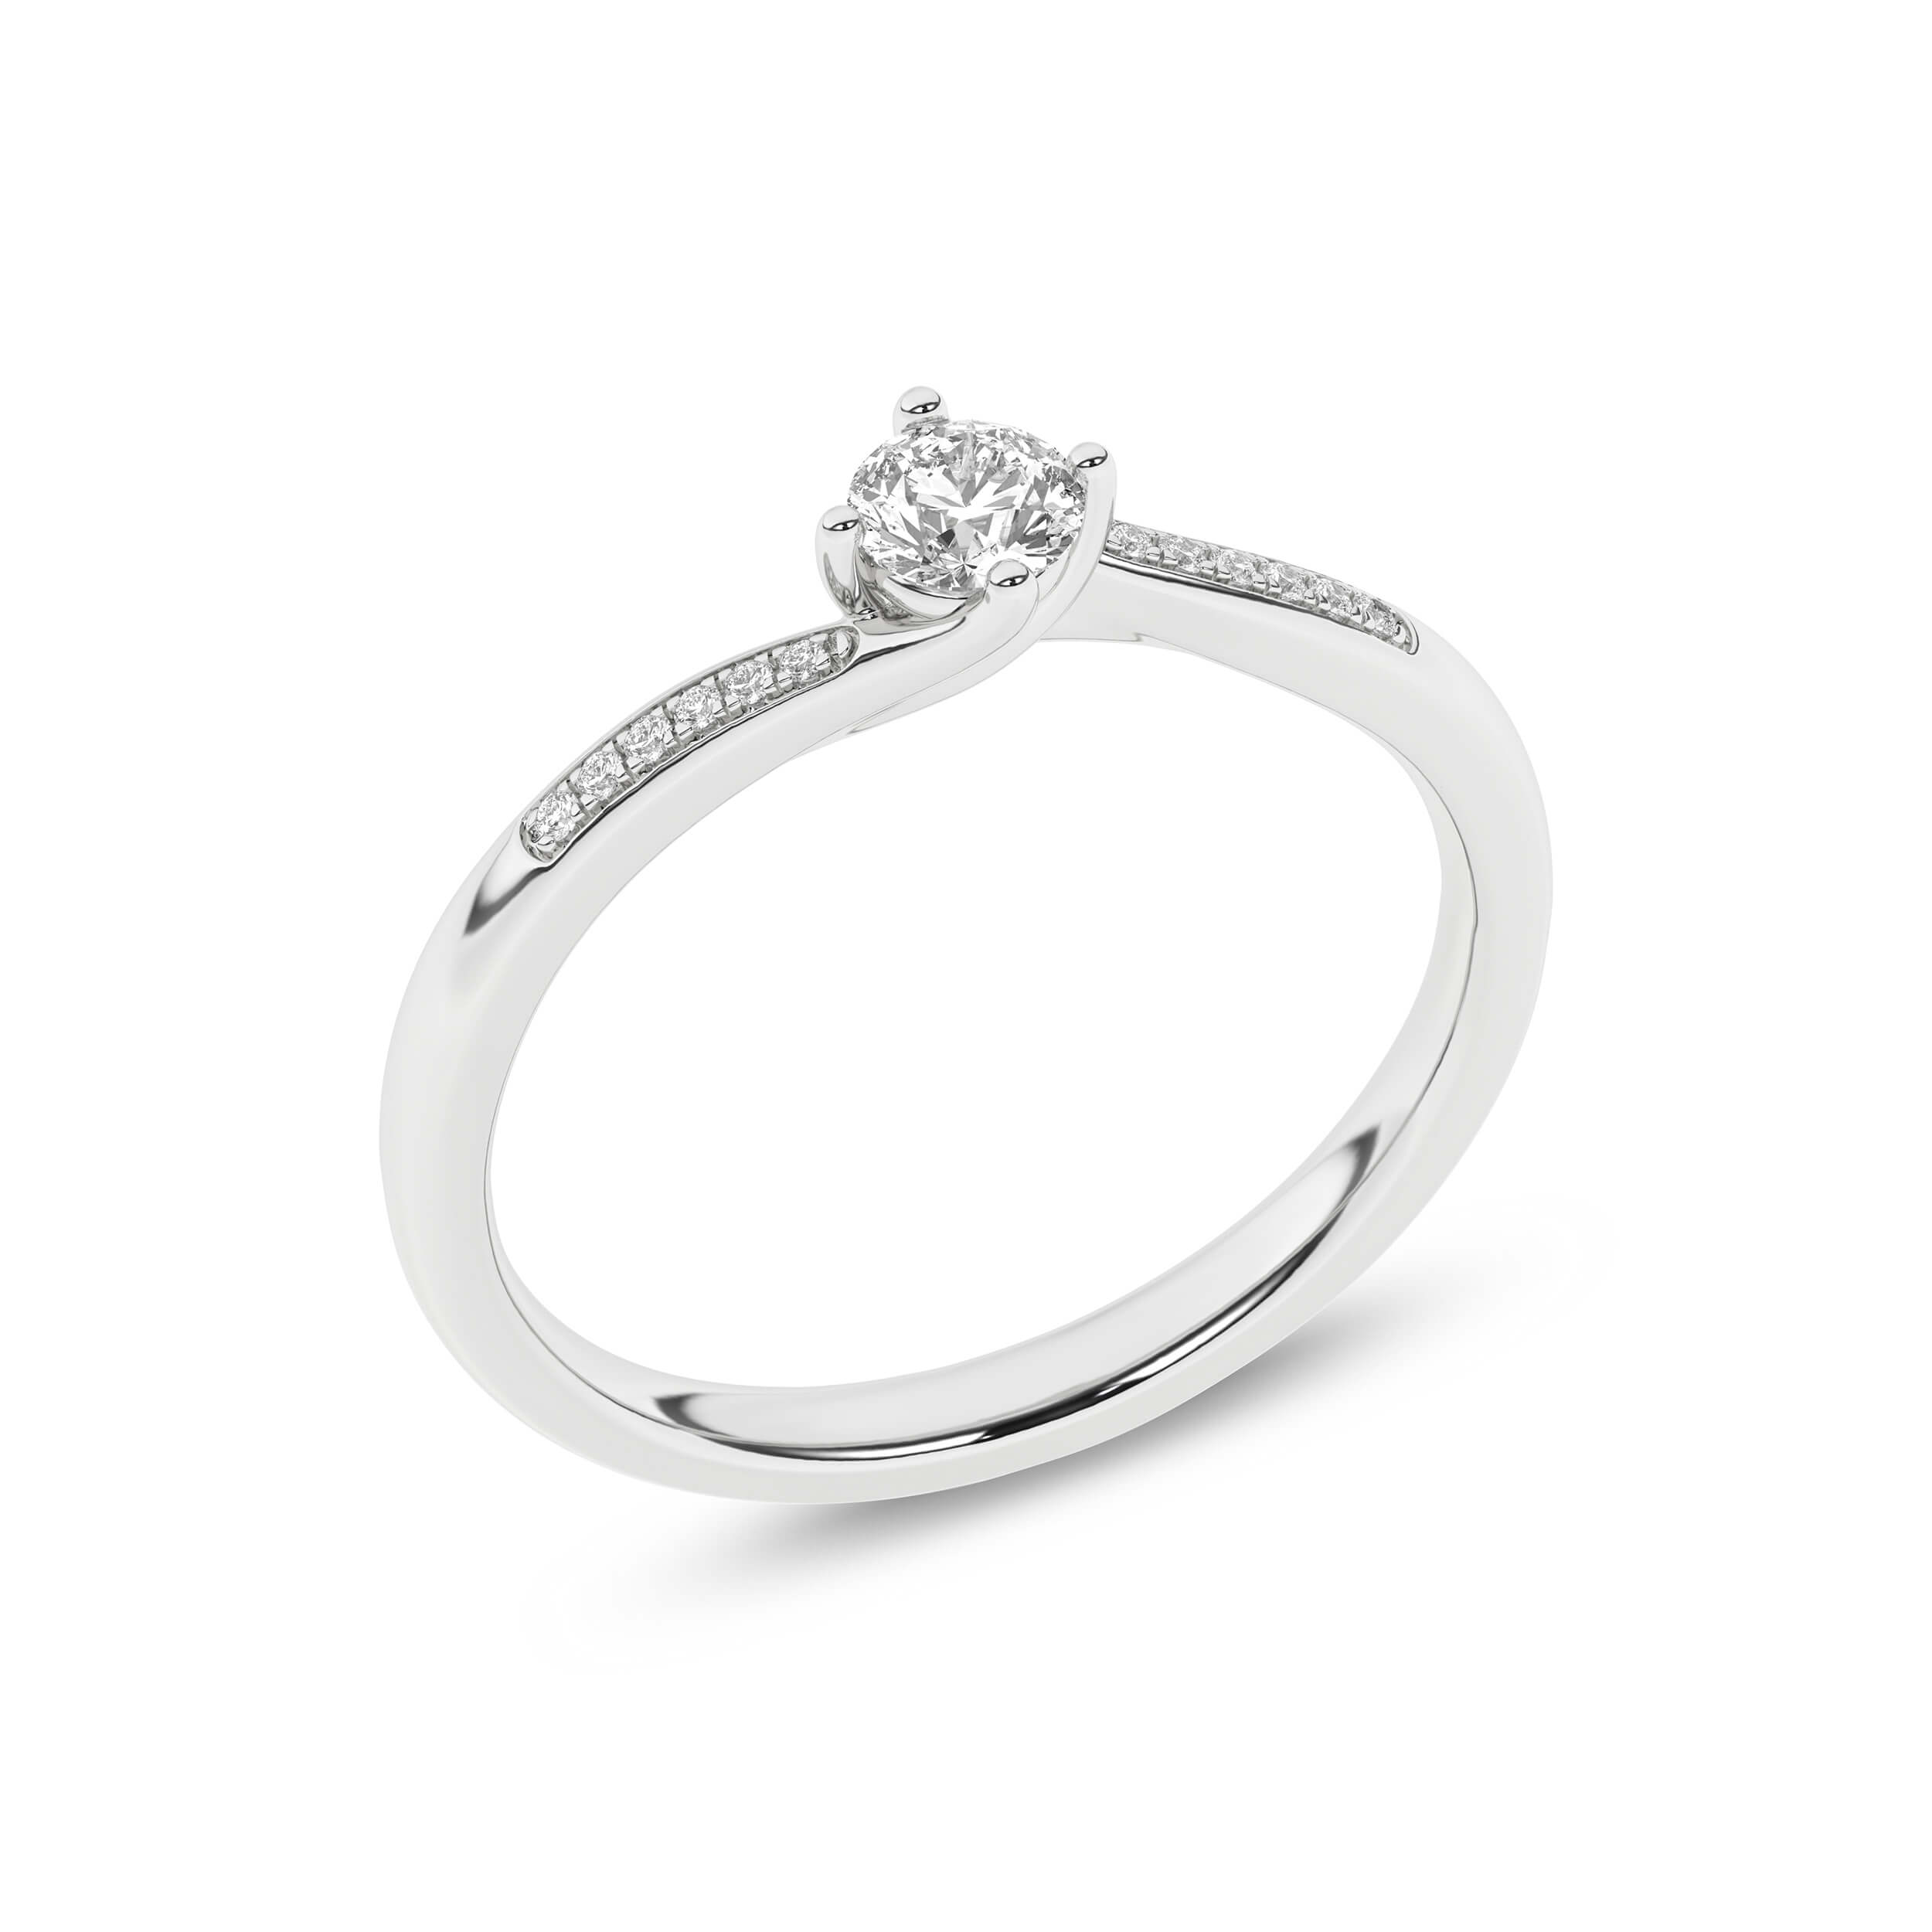 Inel de logodna din Aur Alb 14K cu Diamante 0.23Ct, articol MSD0344EG, previzualizare foto 4